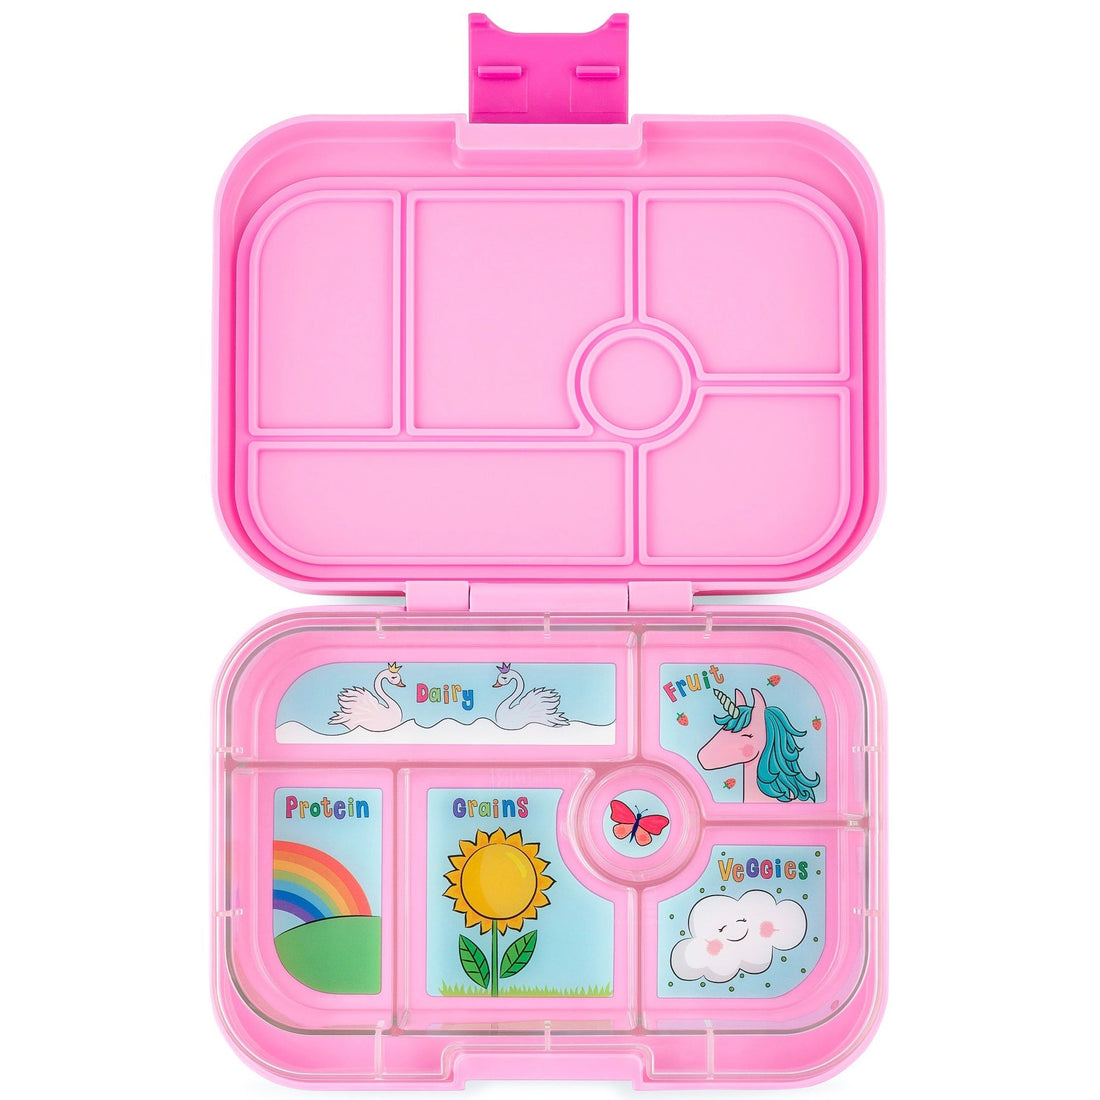 yumbox-original-6-compartment-lunch-box-power-pink-unicorn-yumb-ppi202010u- (1)